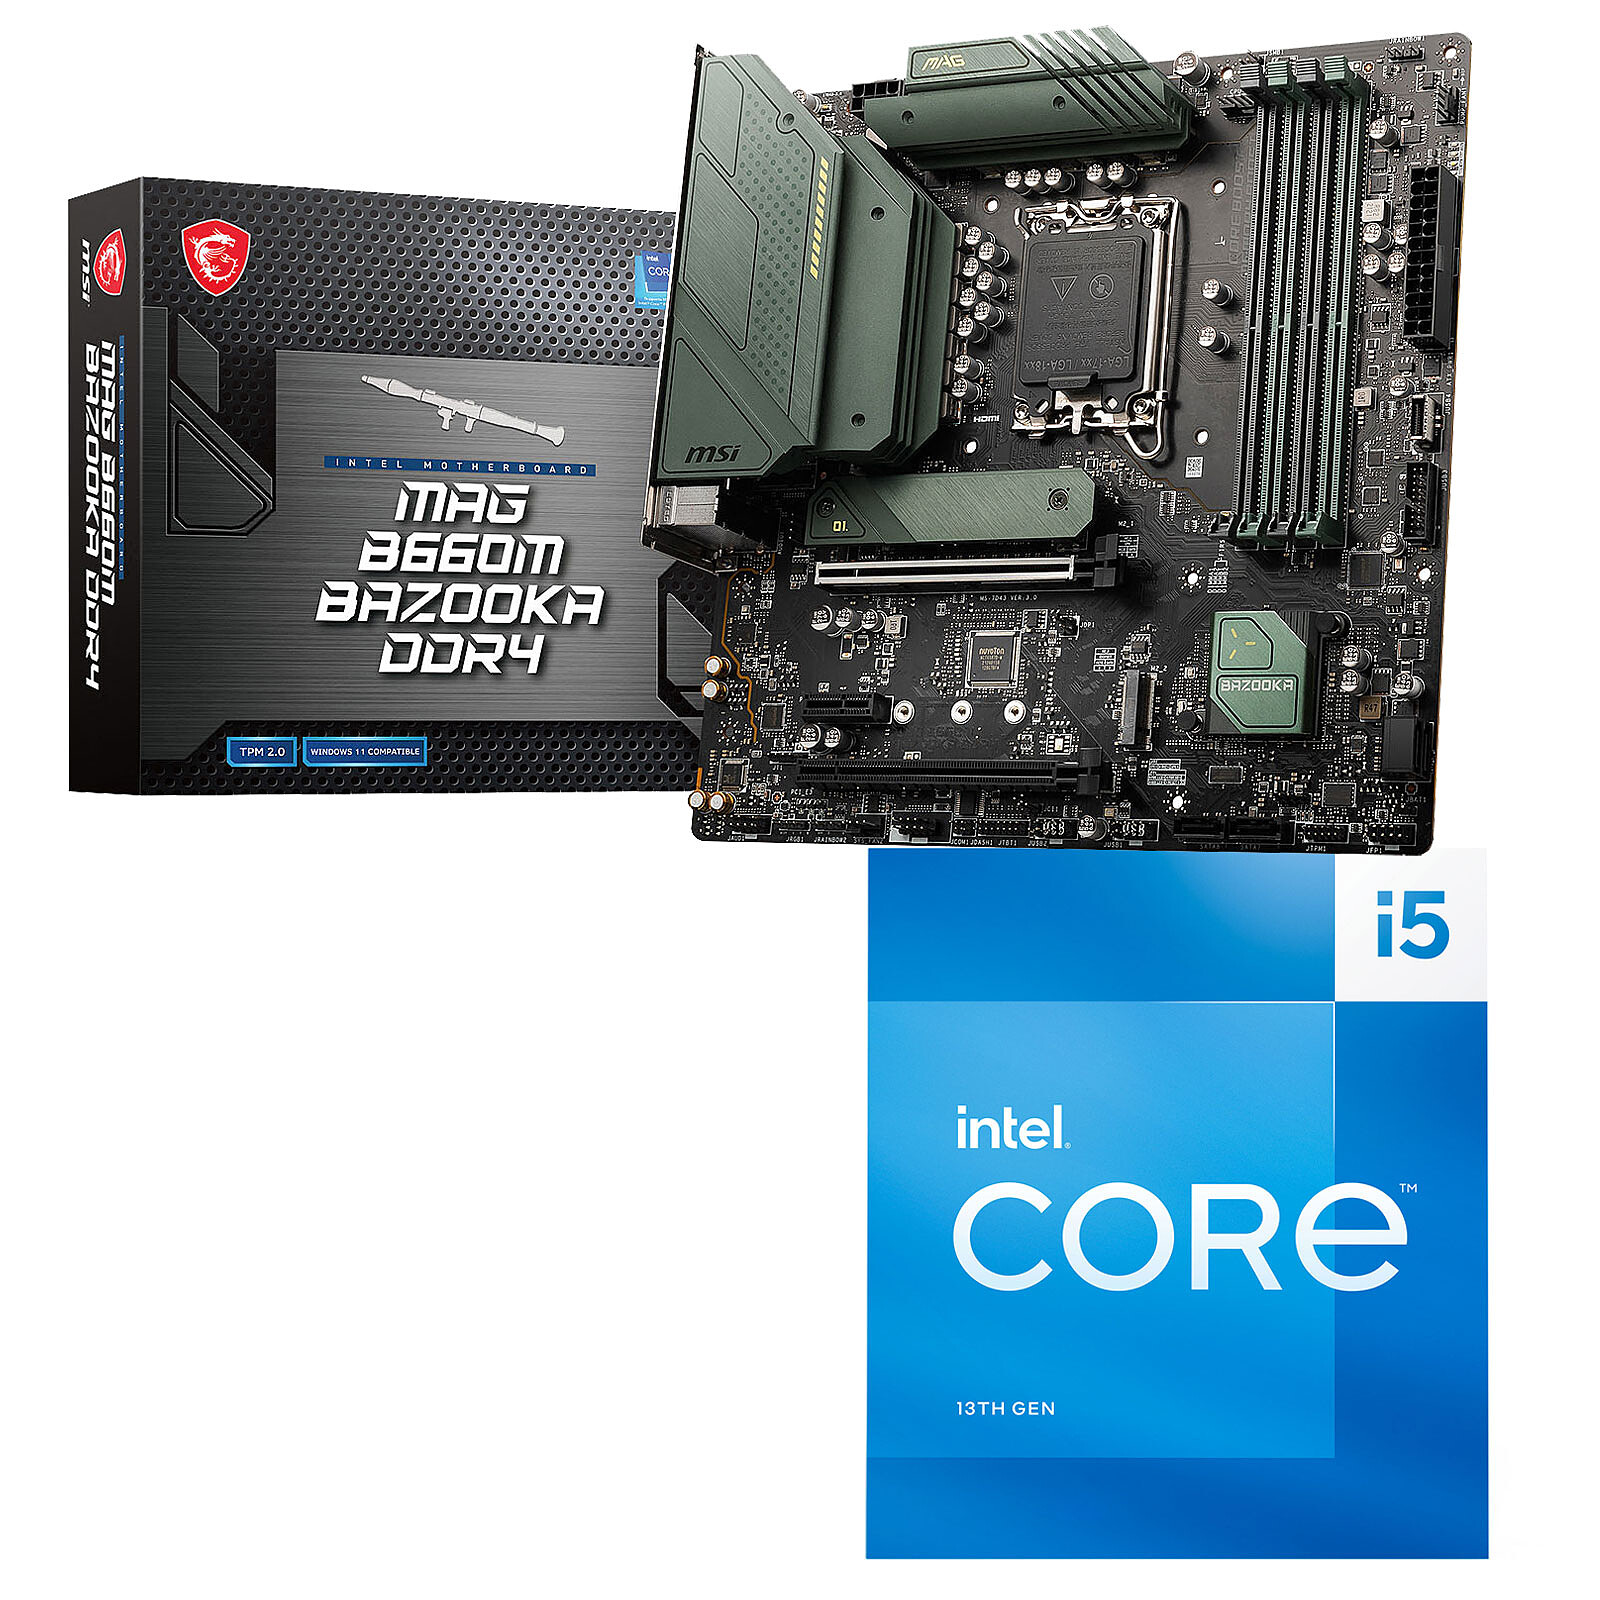 Intel Core i5 13400 Processor